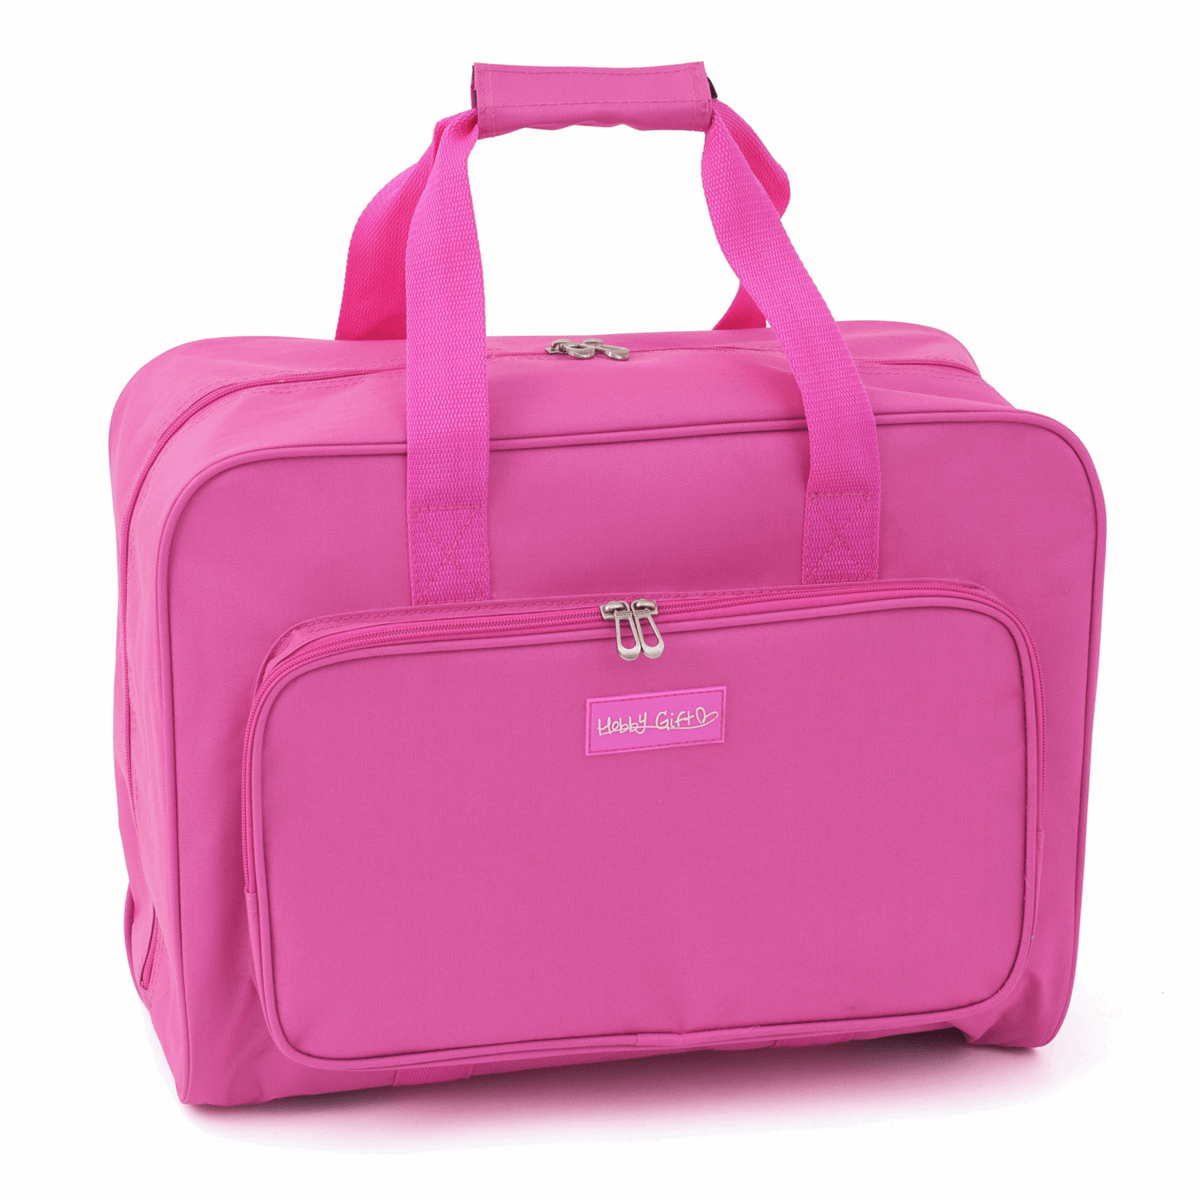 Luxury Sewing Machine Bag - Pink